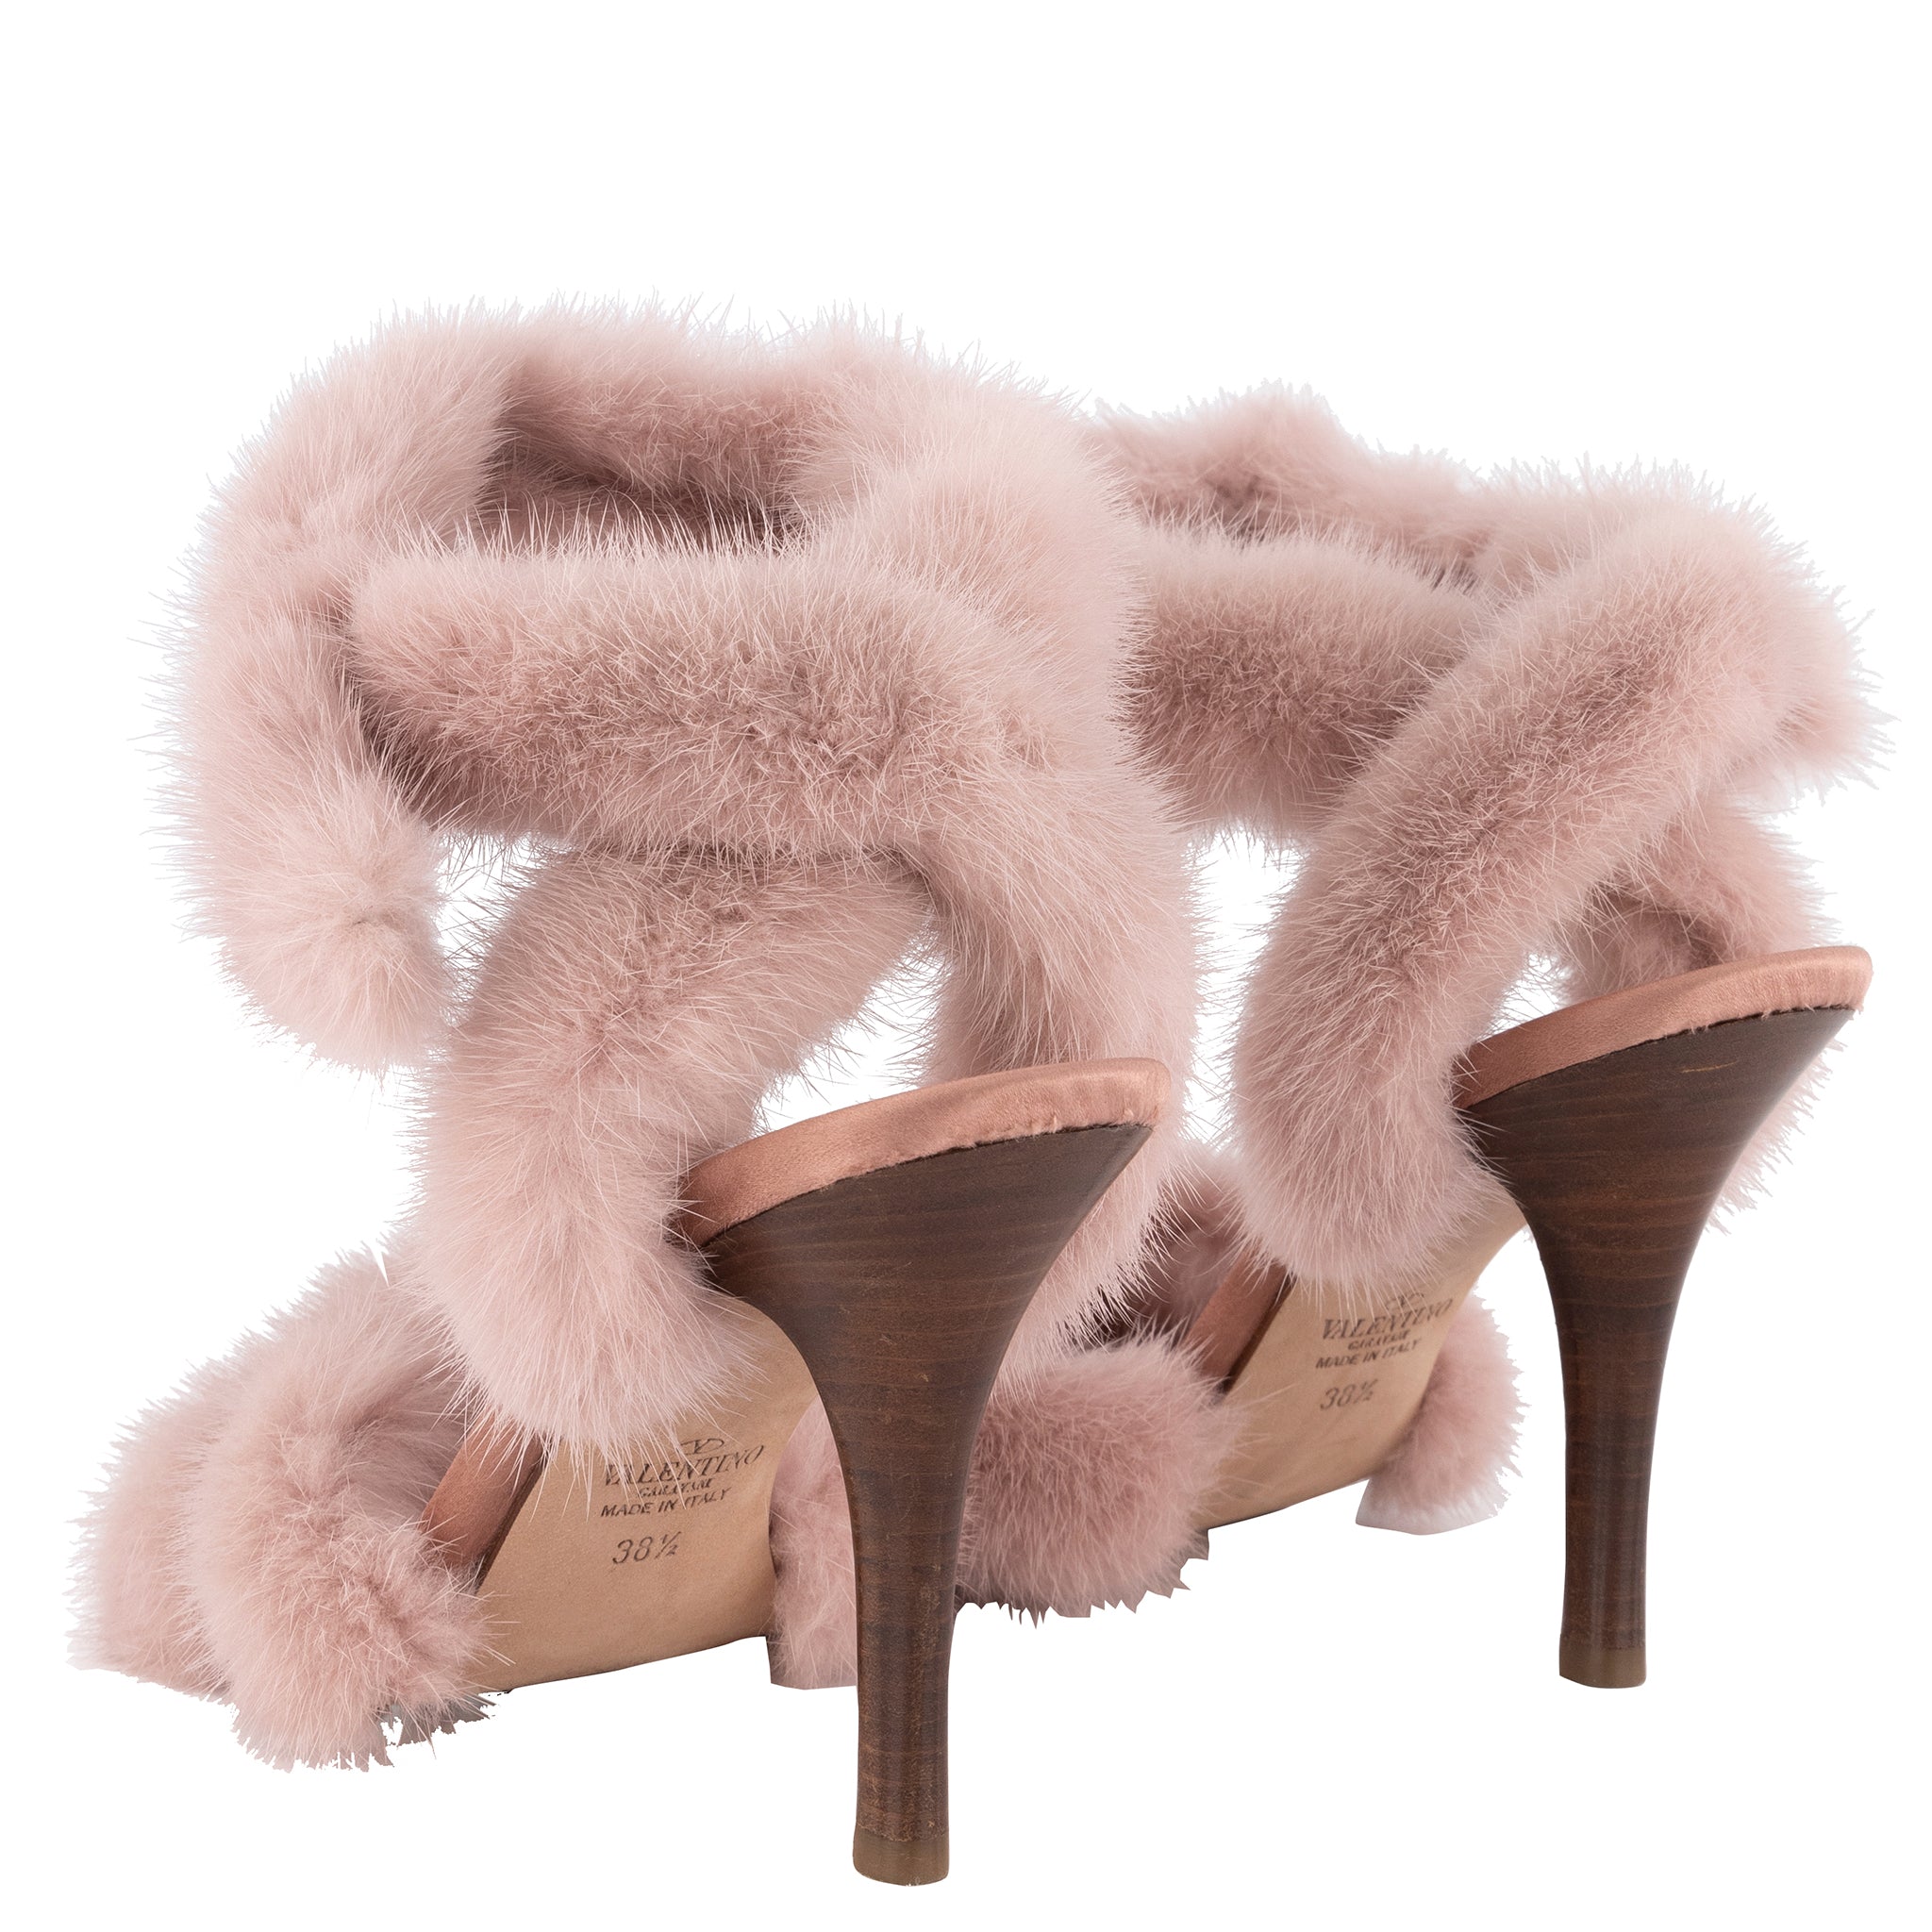 Valentino Mink Fur Ankle Strap - Dream Closet by Sira Pevida